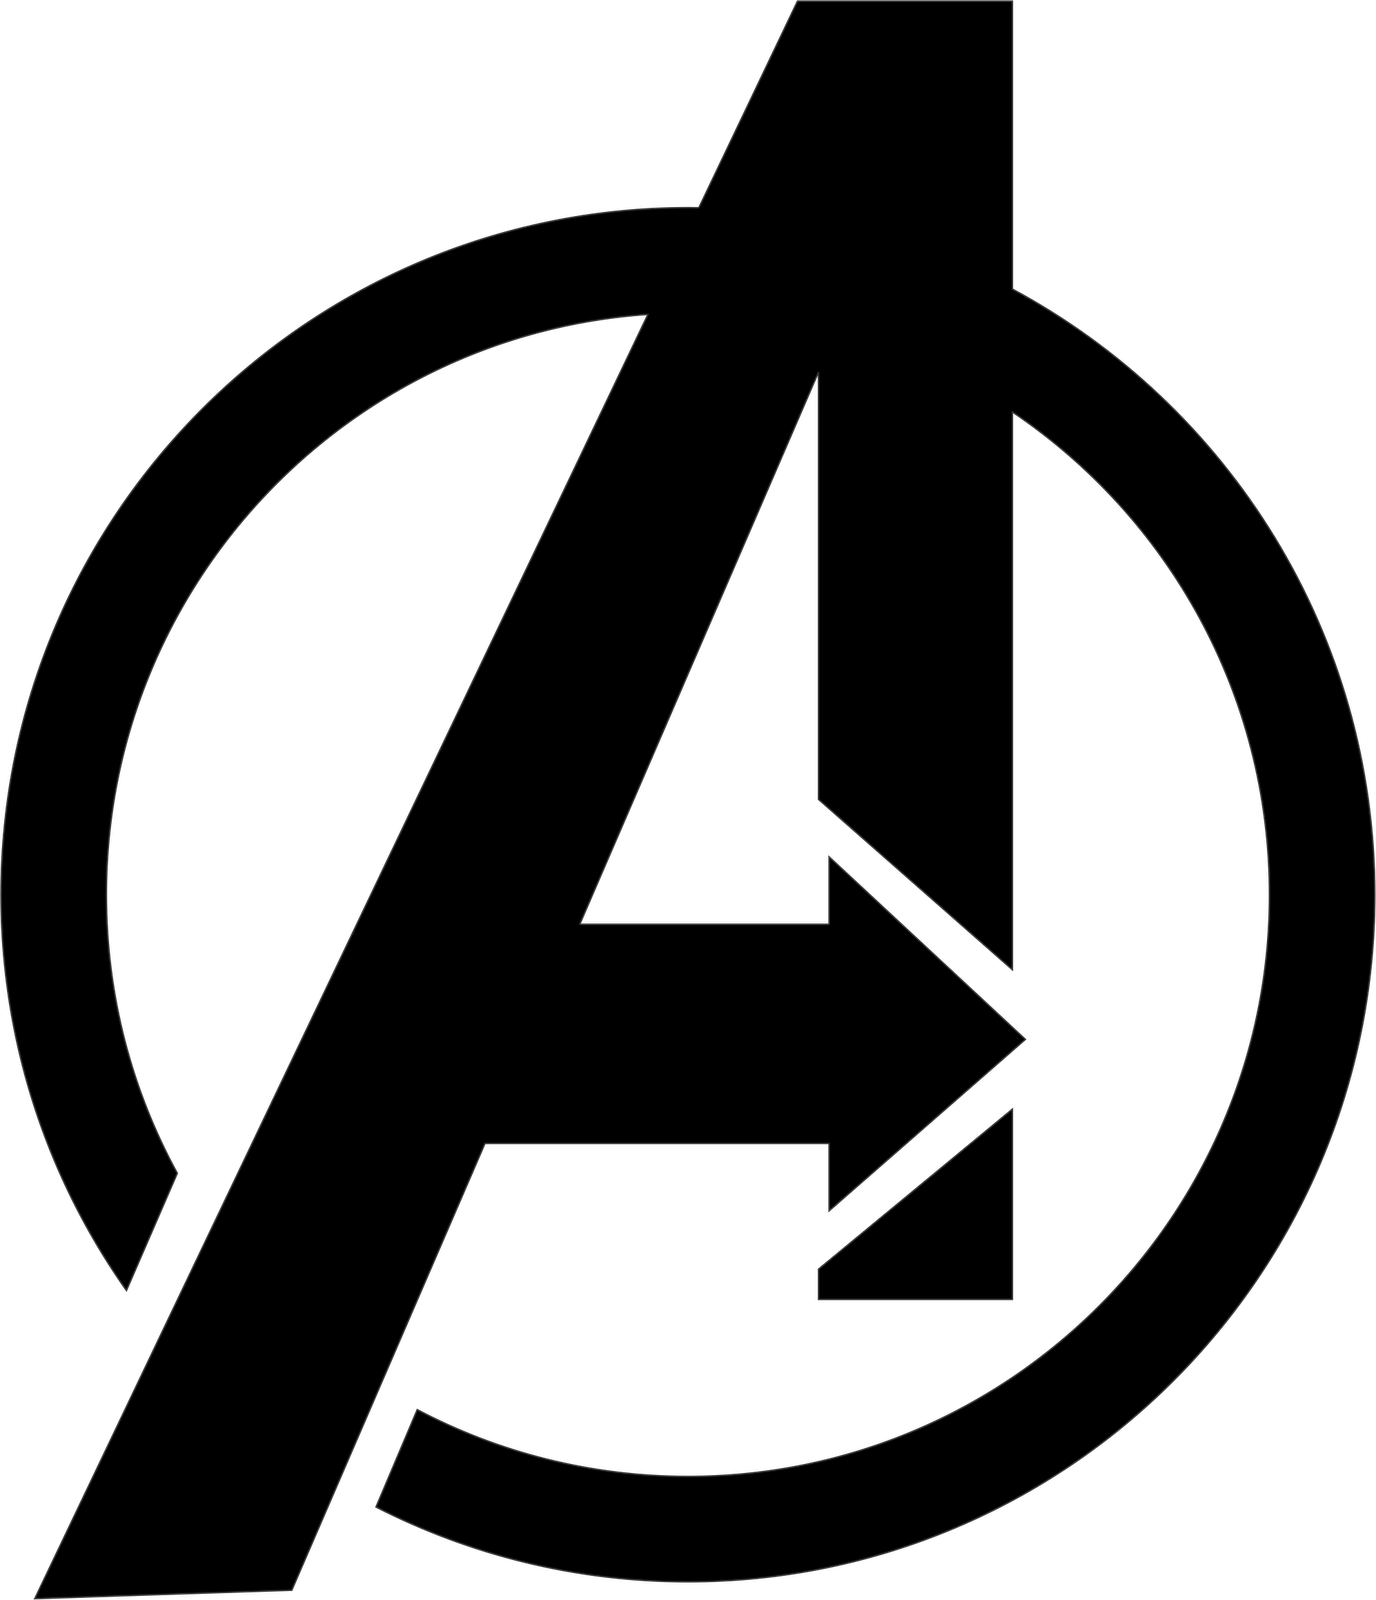 Avengers logo.png